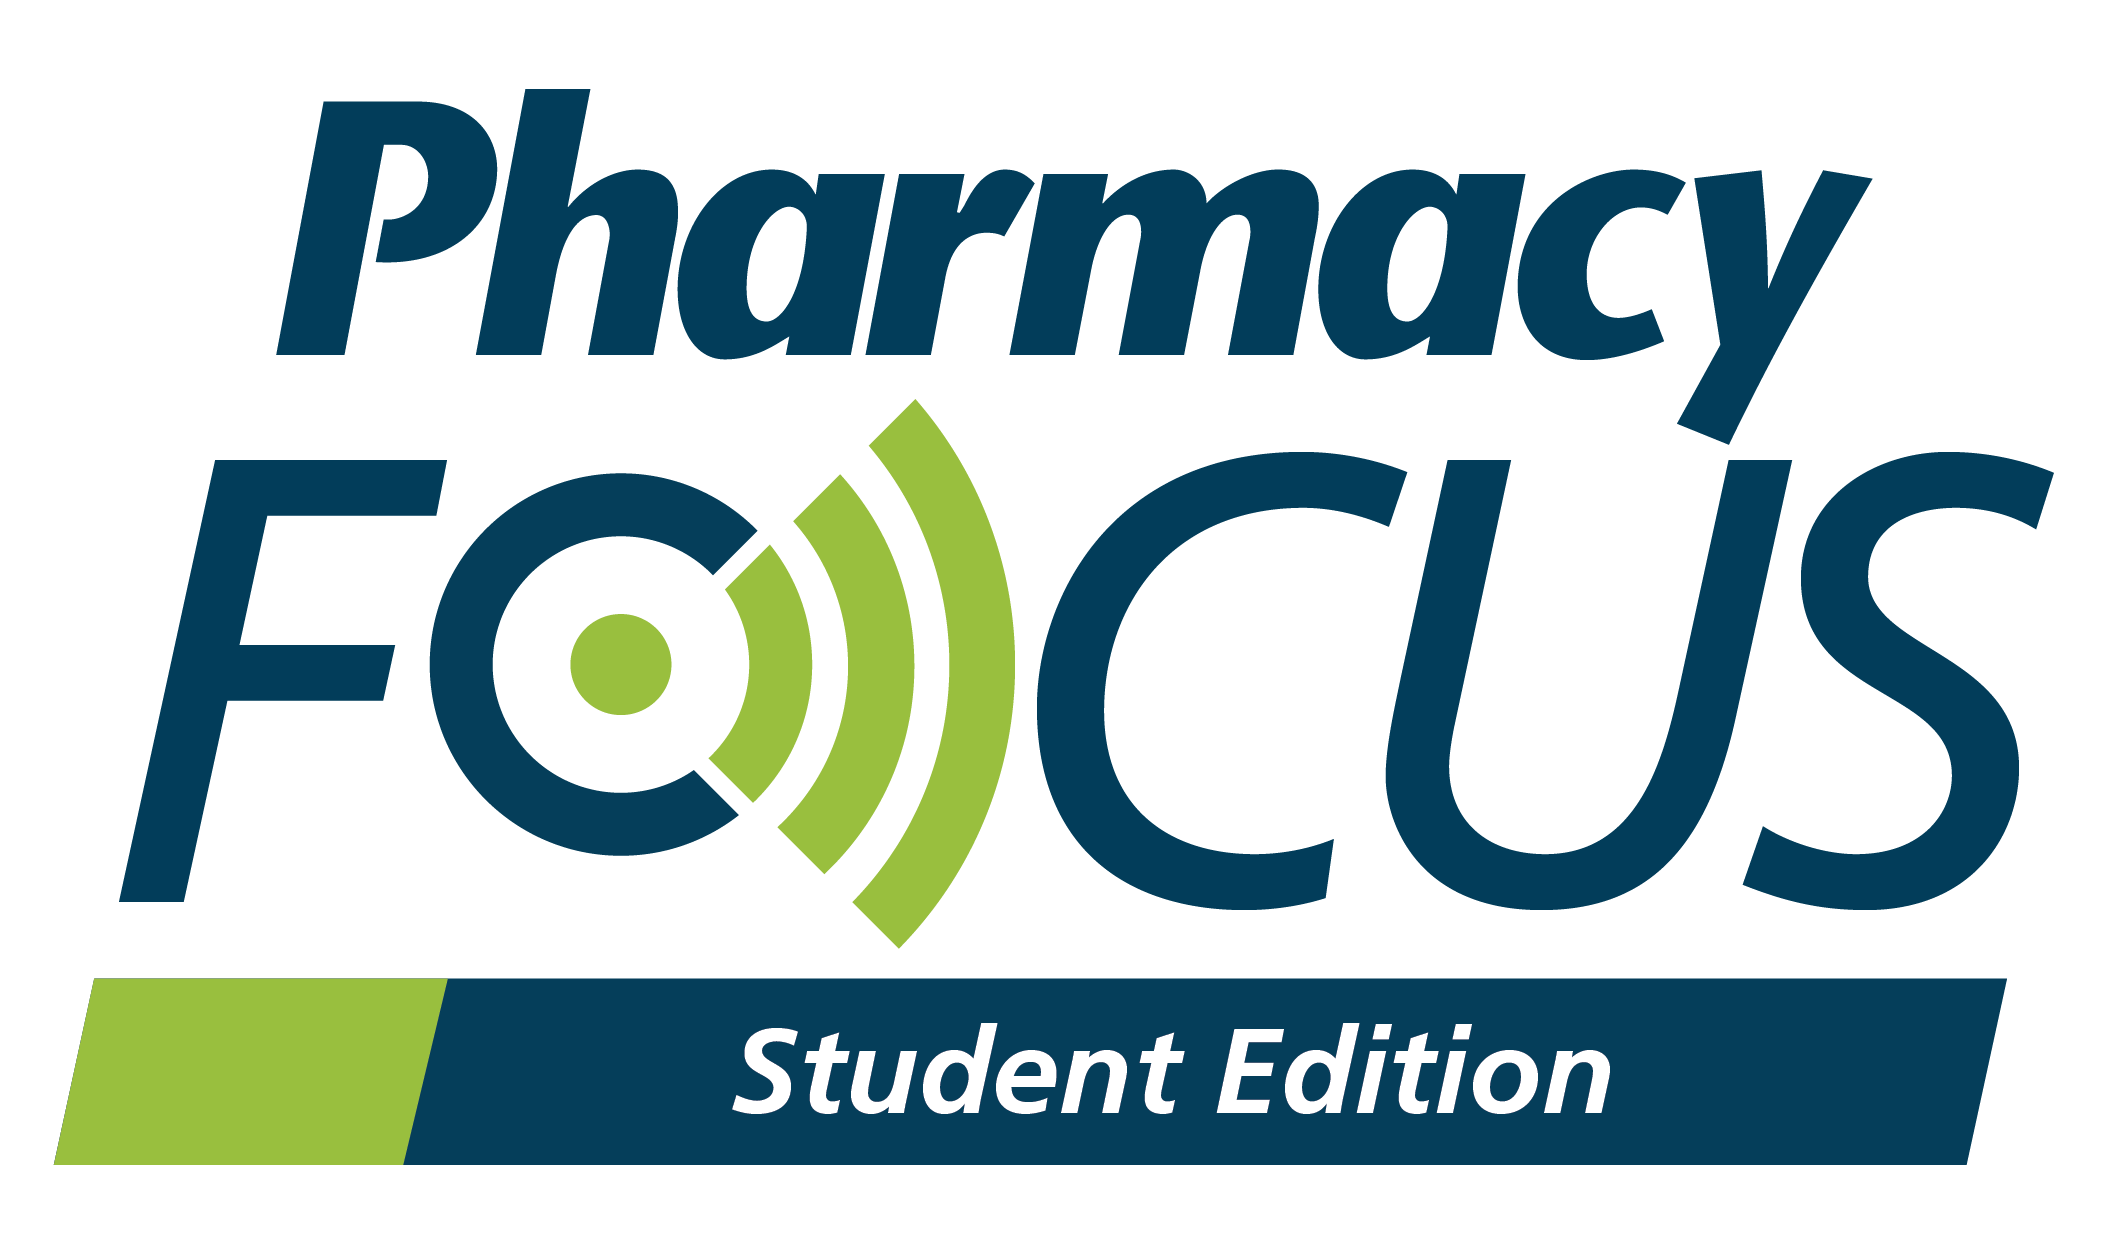 Pharmacy Focus Podcast: New Series - Study Break